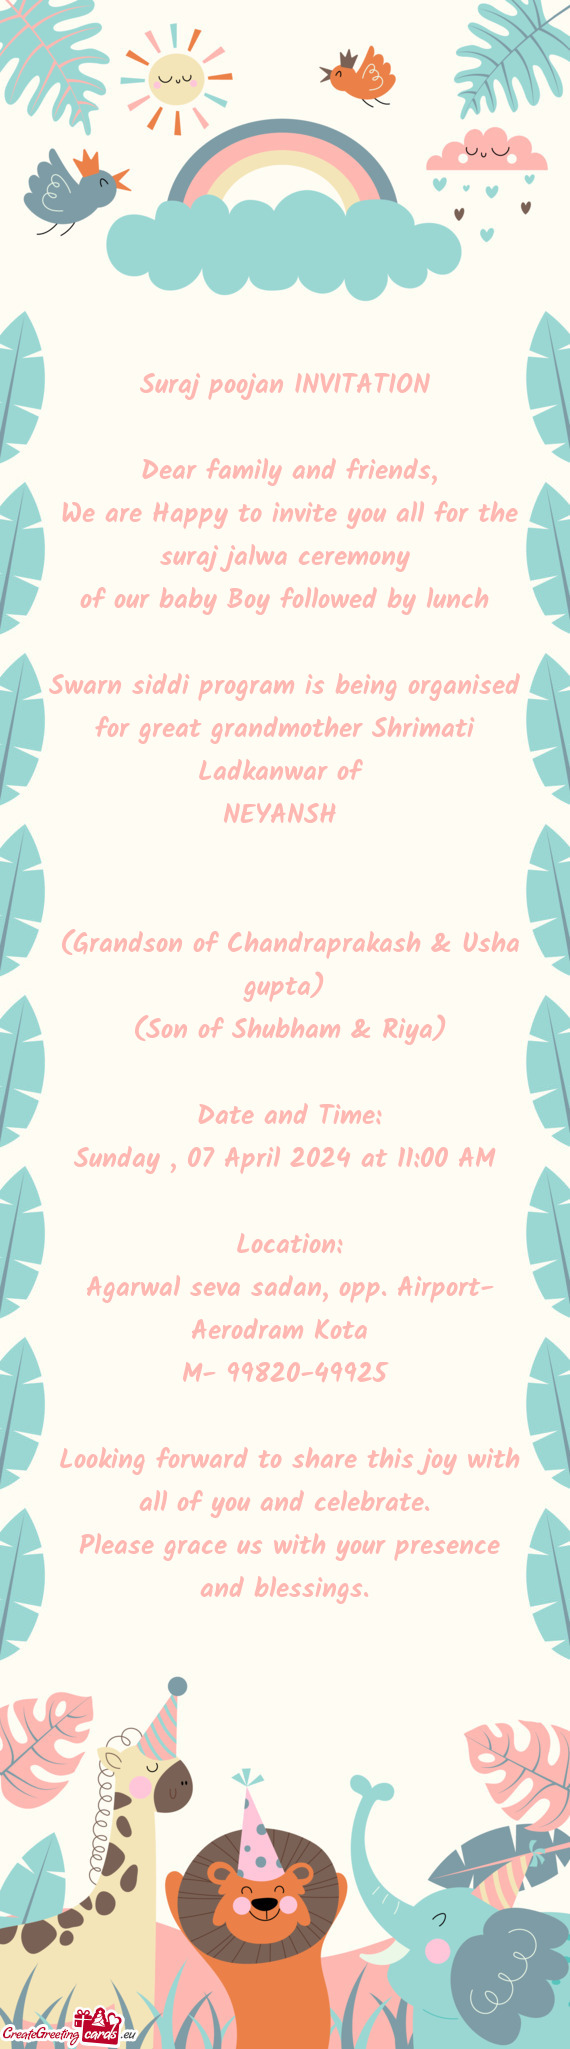 Swarn siddi program is being organised for great grandmother Shrimati Ladkanwar of